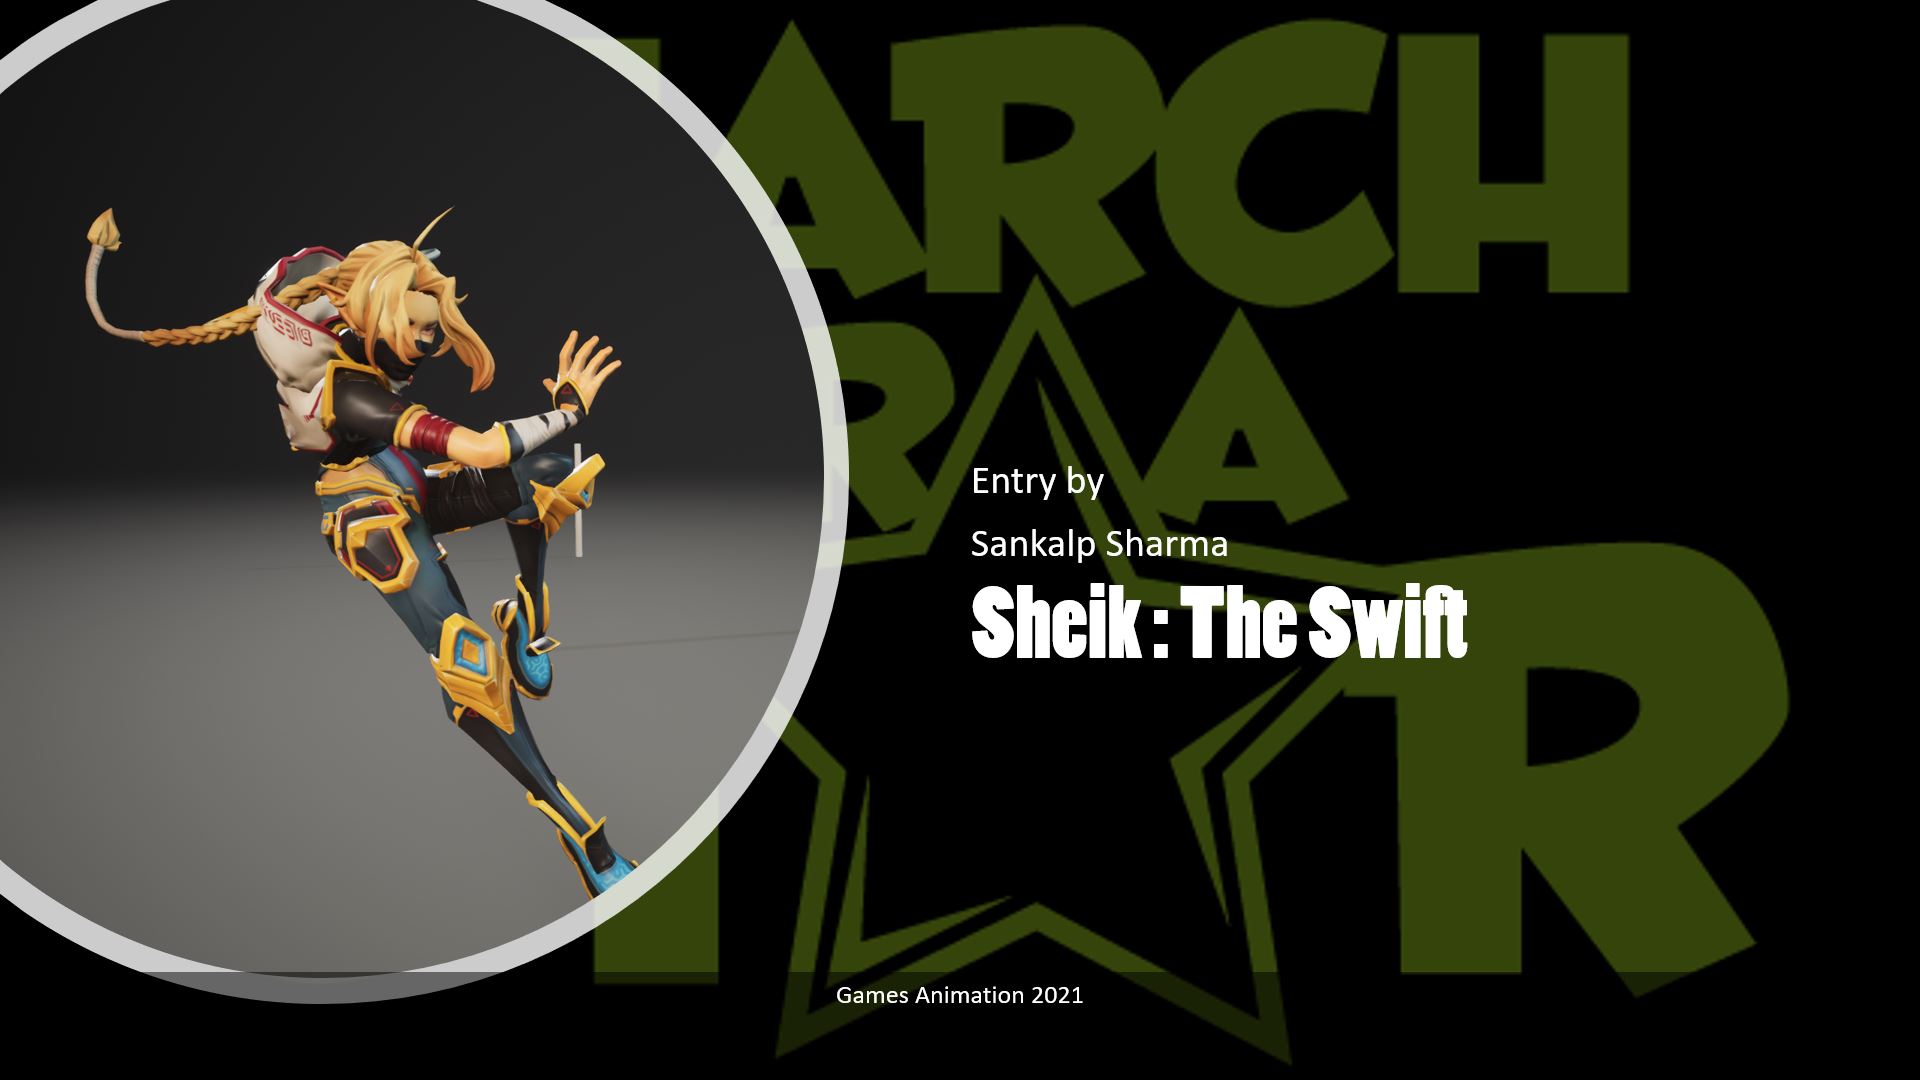 Sheik: The Swift